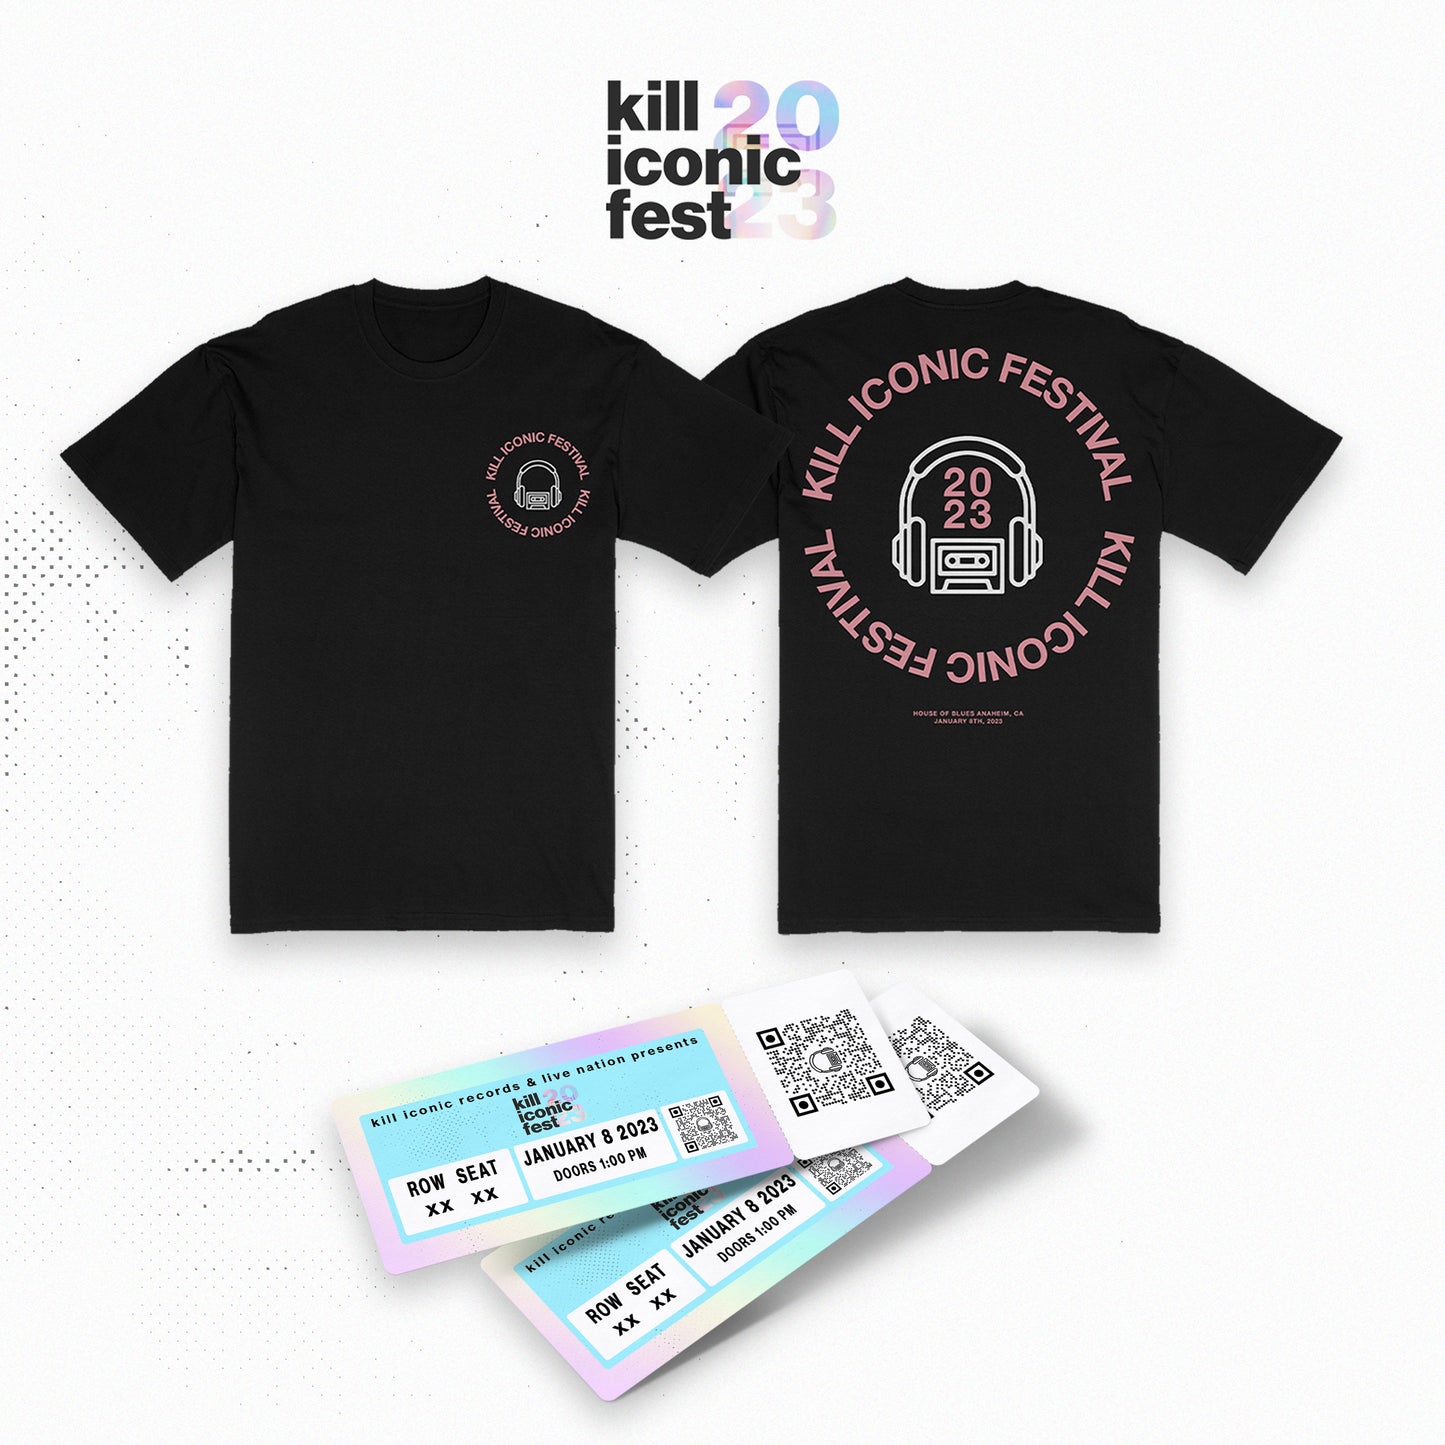 kill iconic fest - Bundle (General Admission + t shirt)